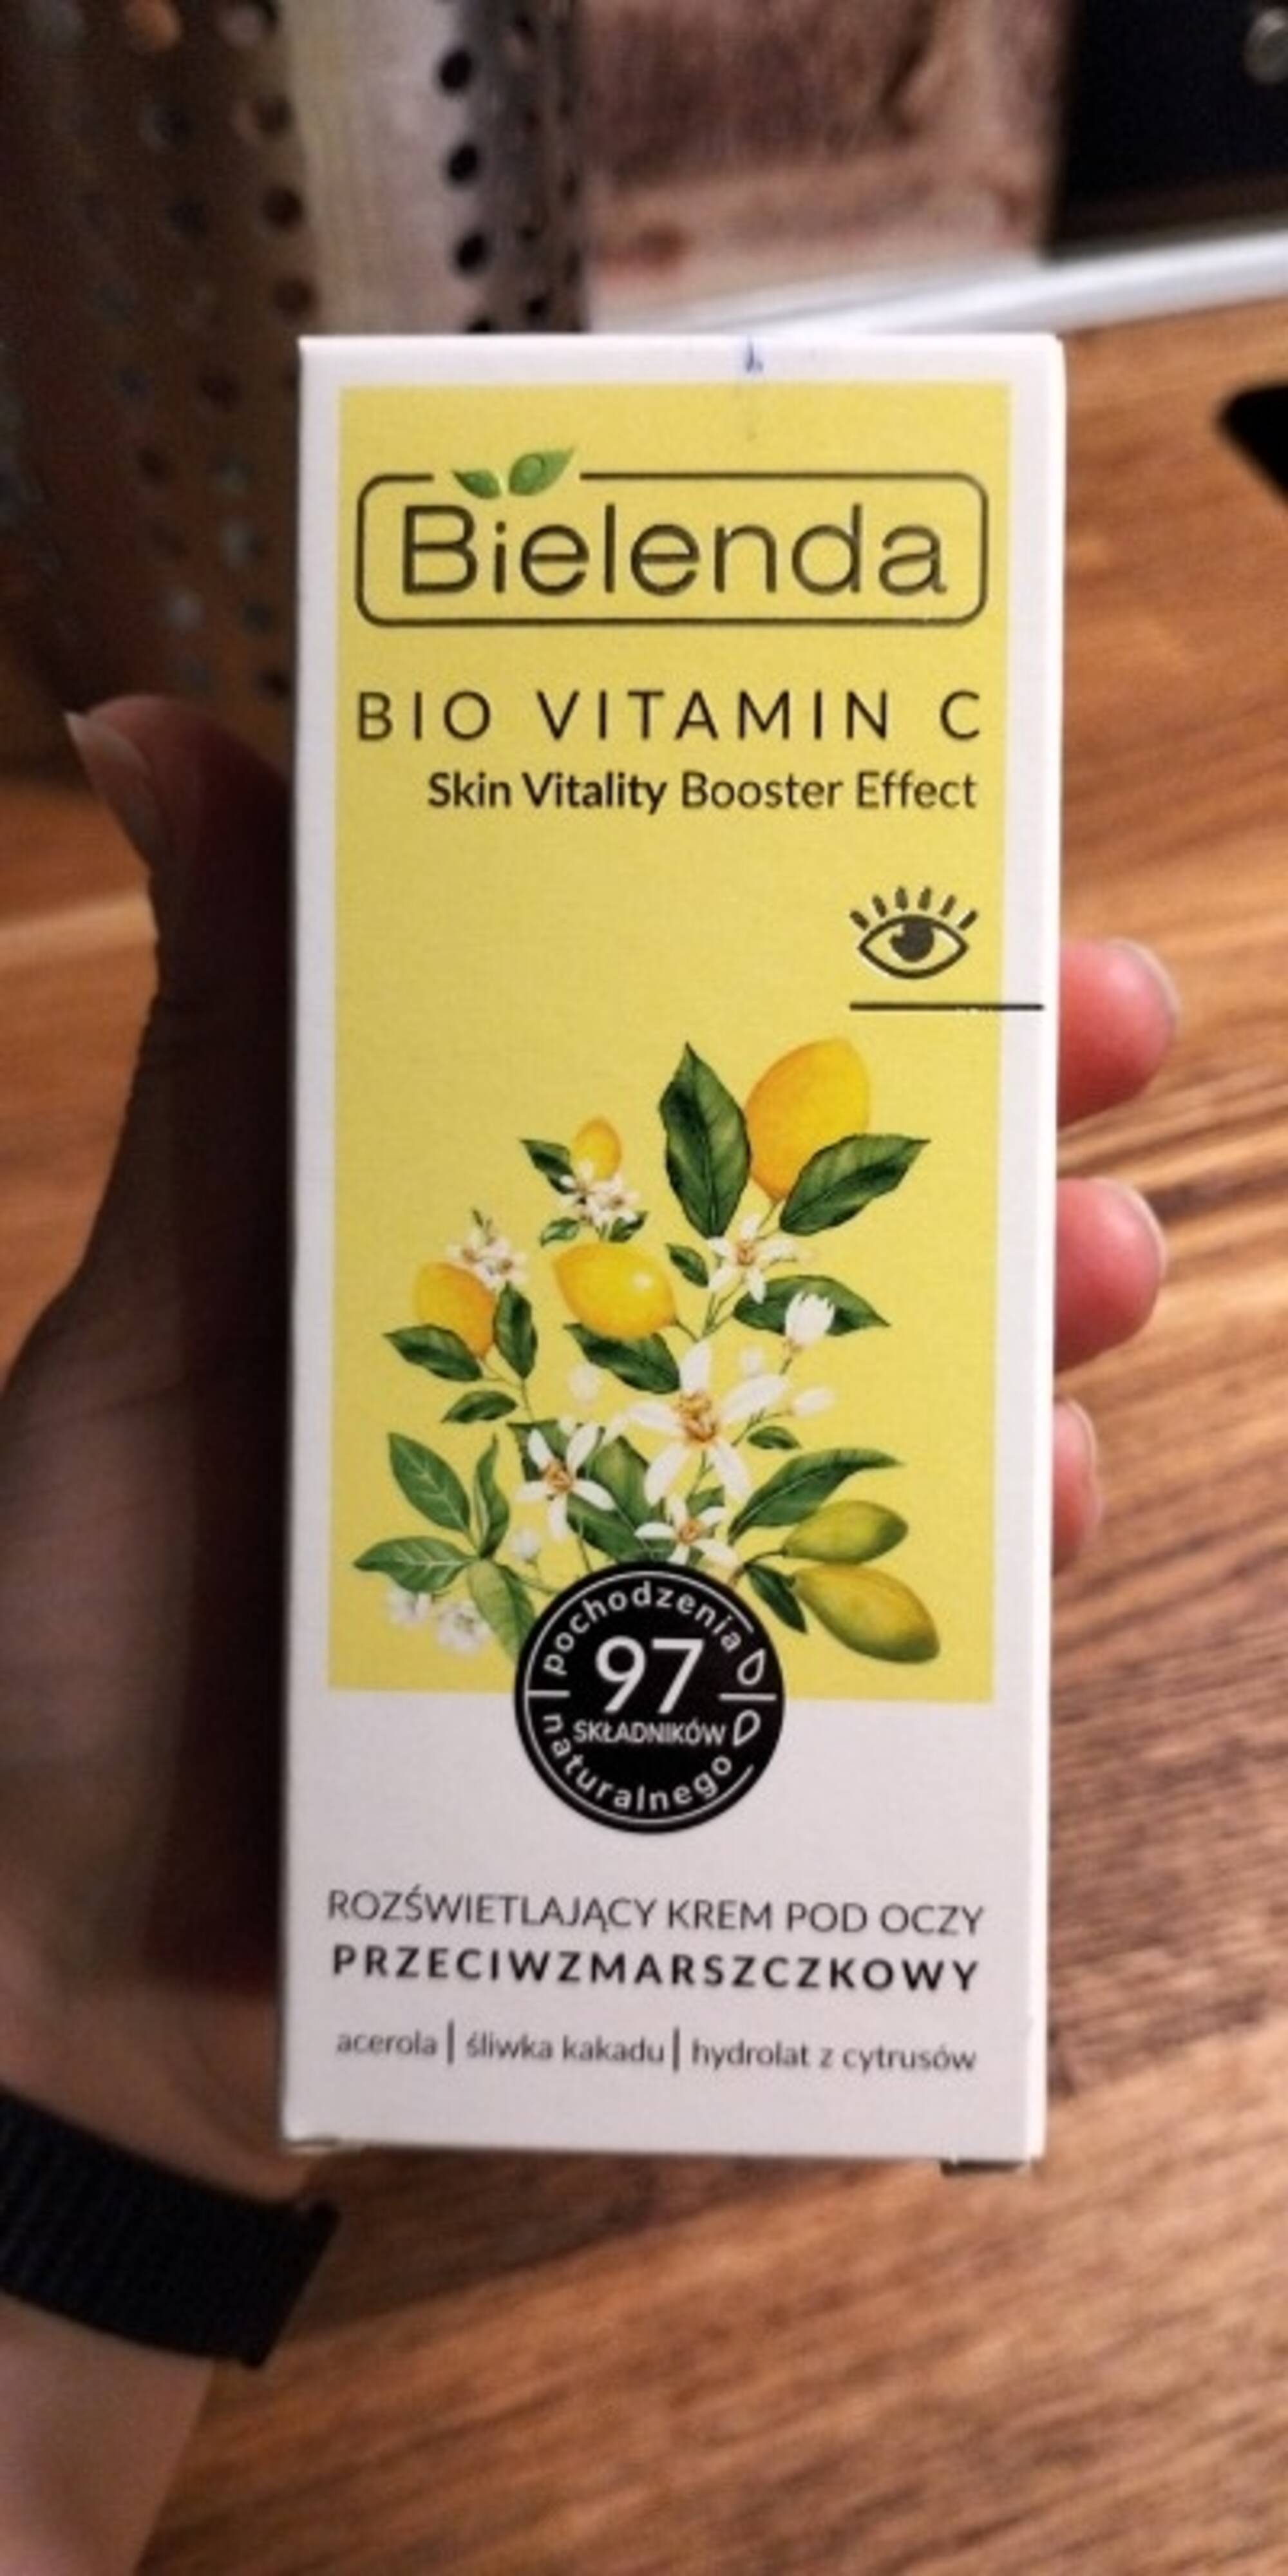 BIELENDA - Bio vitamin C skin vitality booster effect